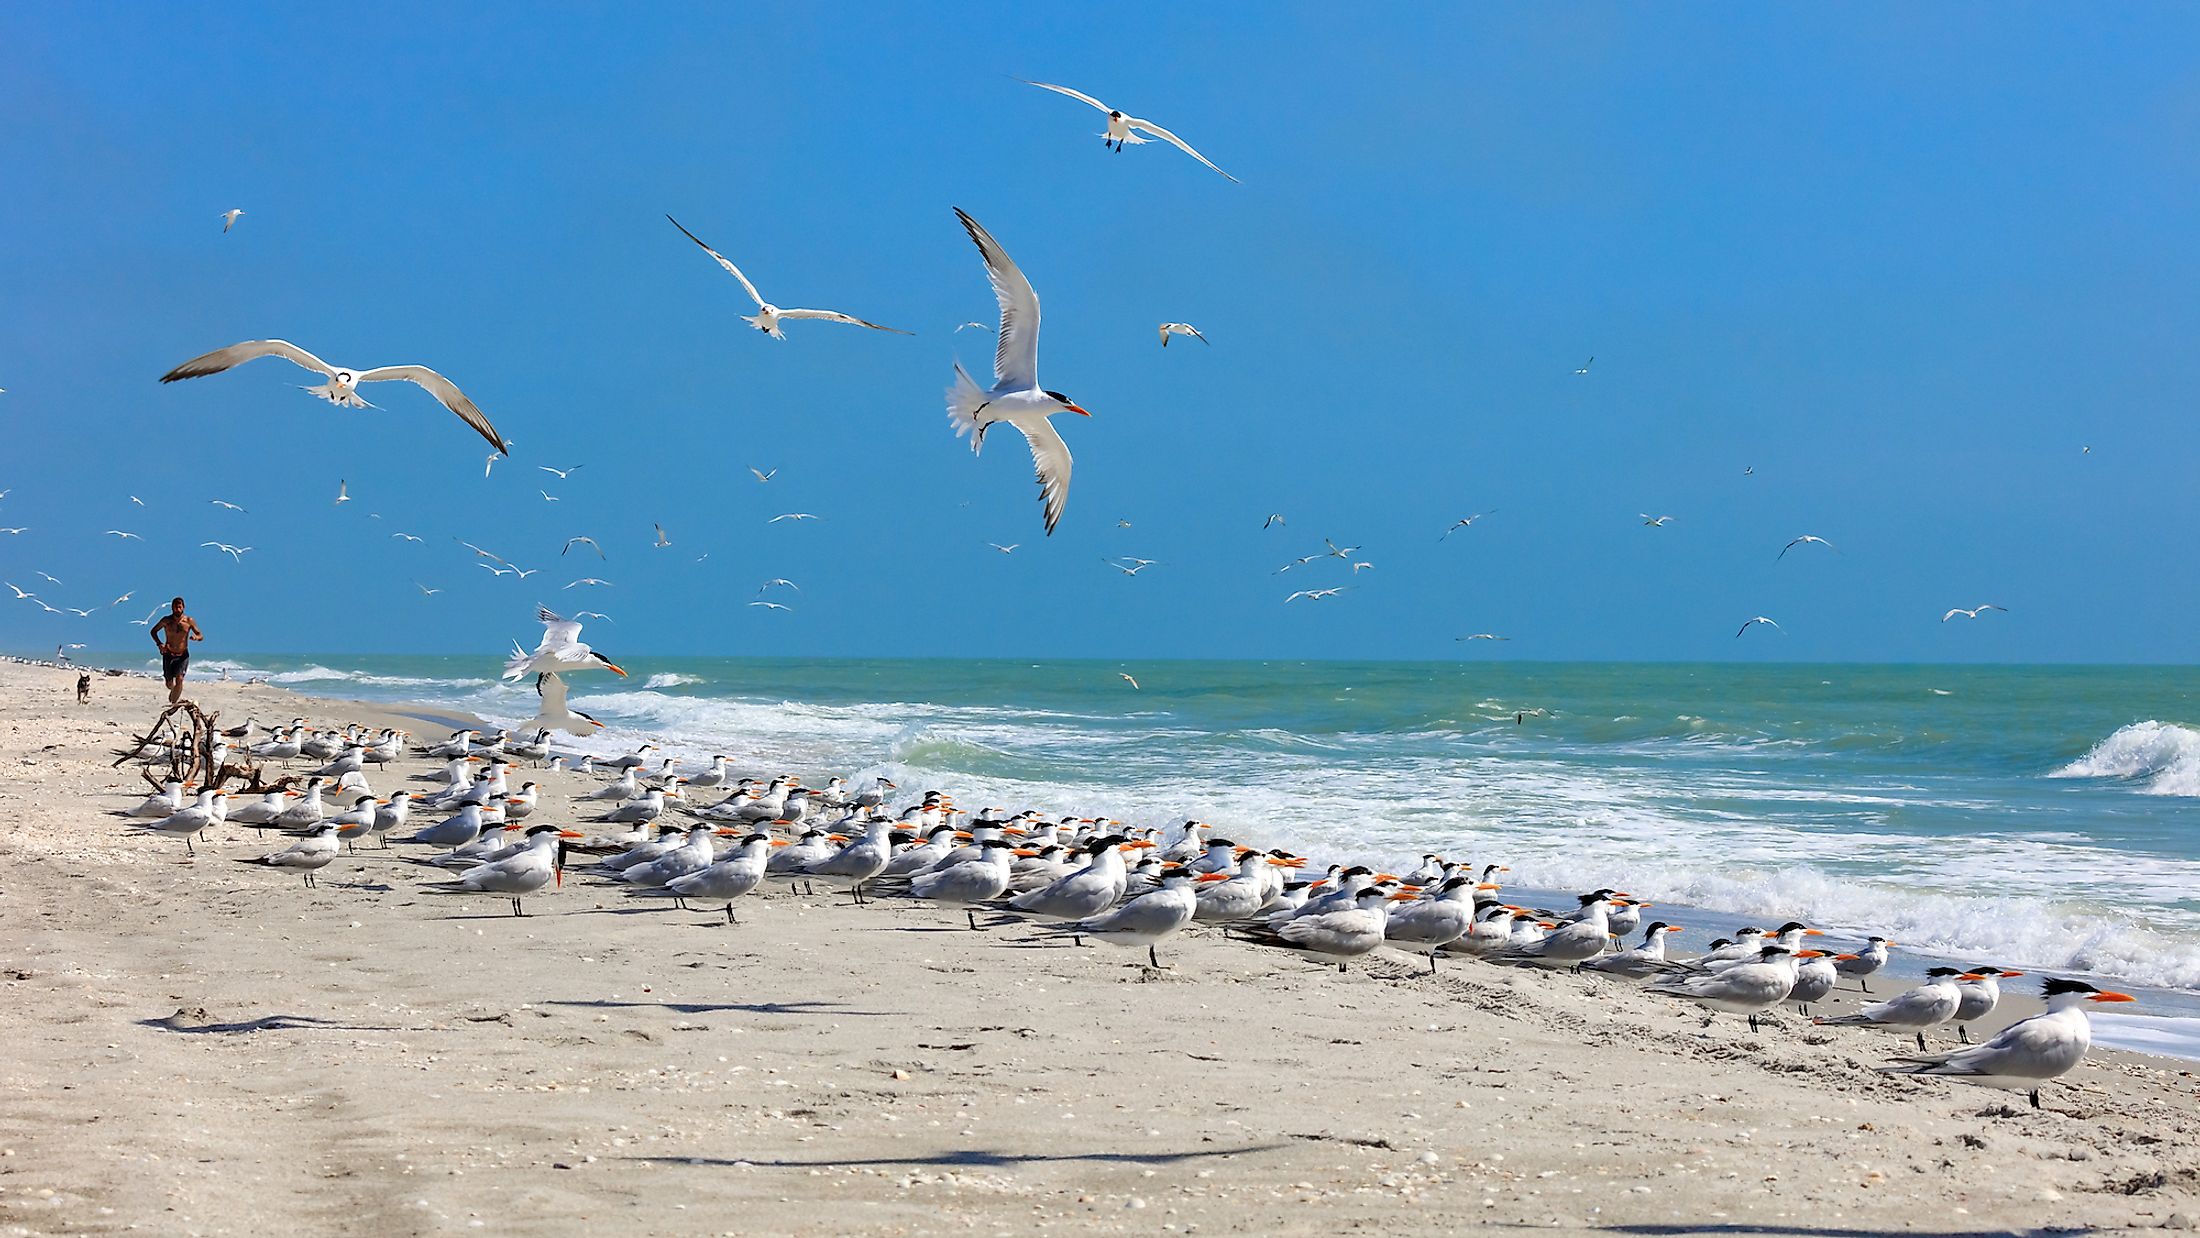 Flock of royal terns on a typical beach on Sanibel Island, Florida.